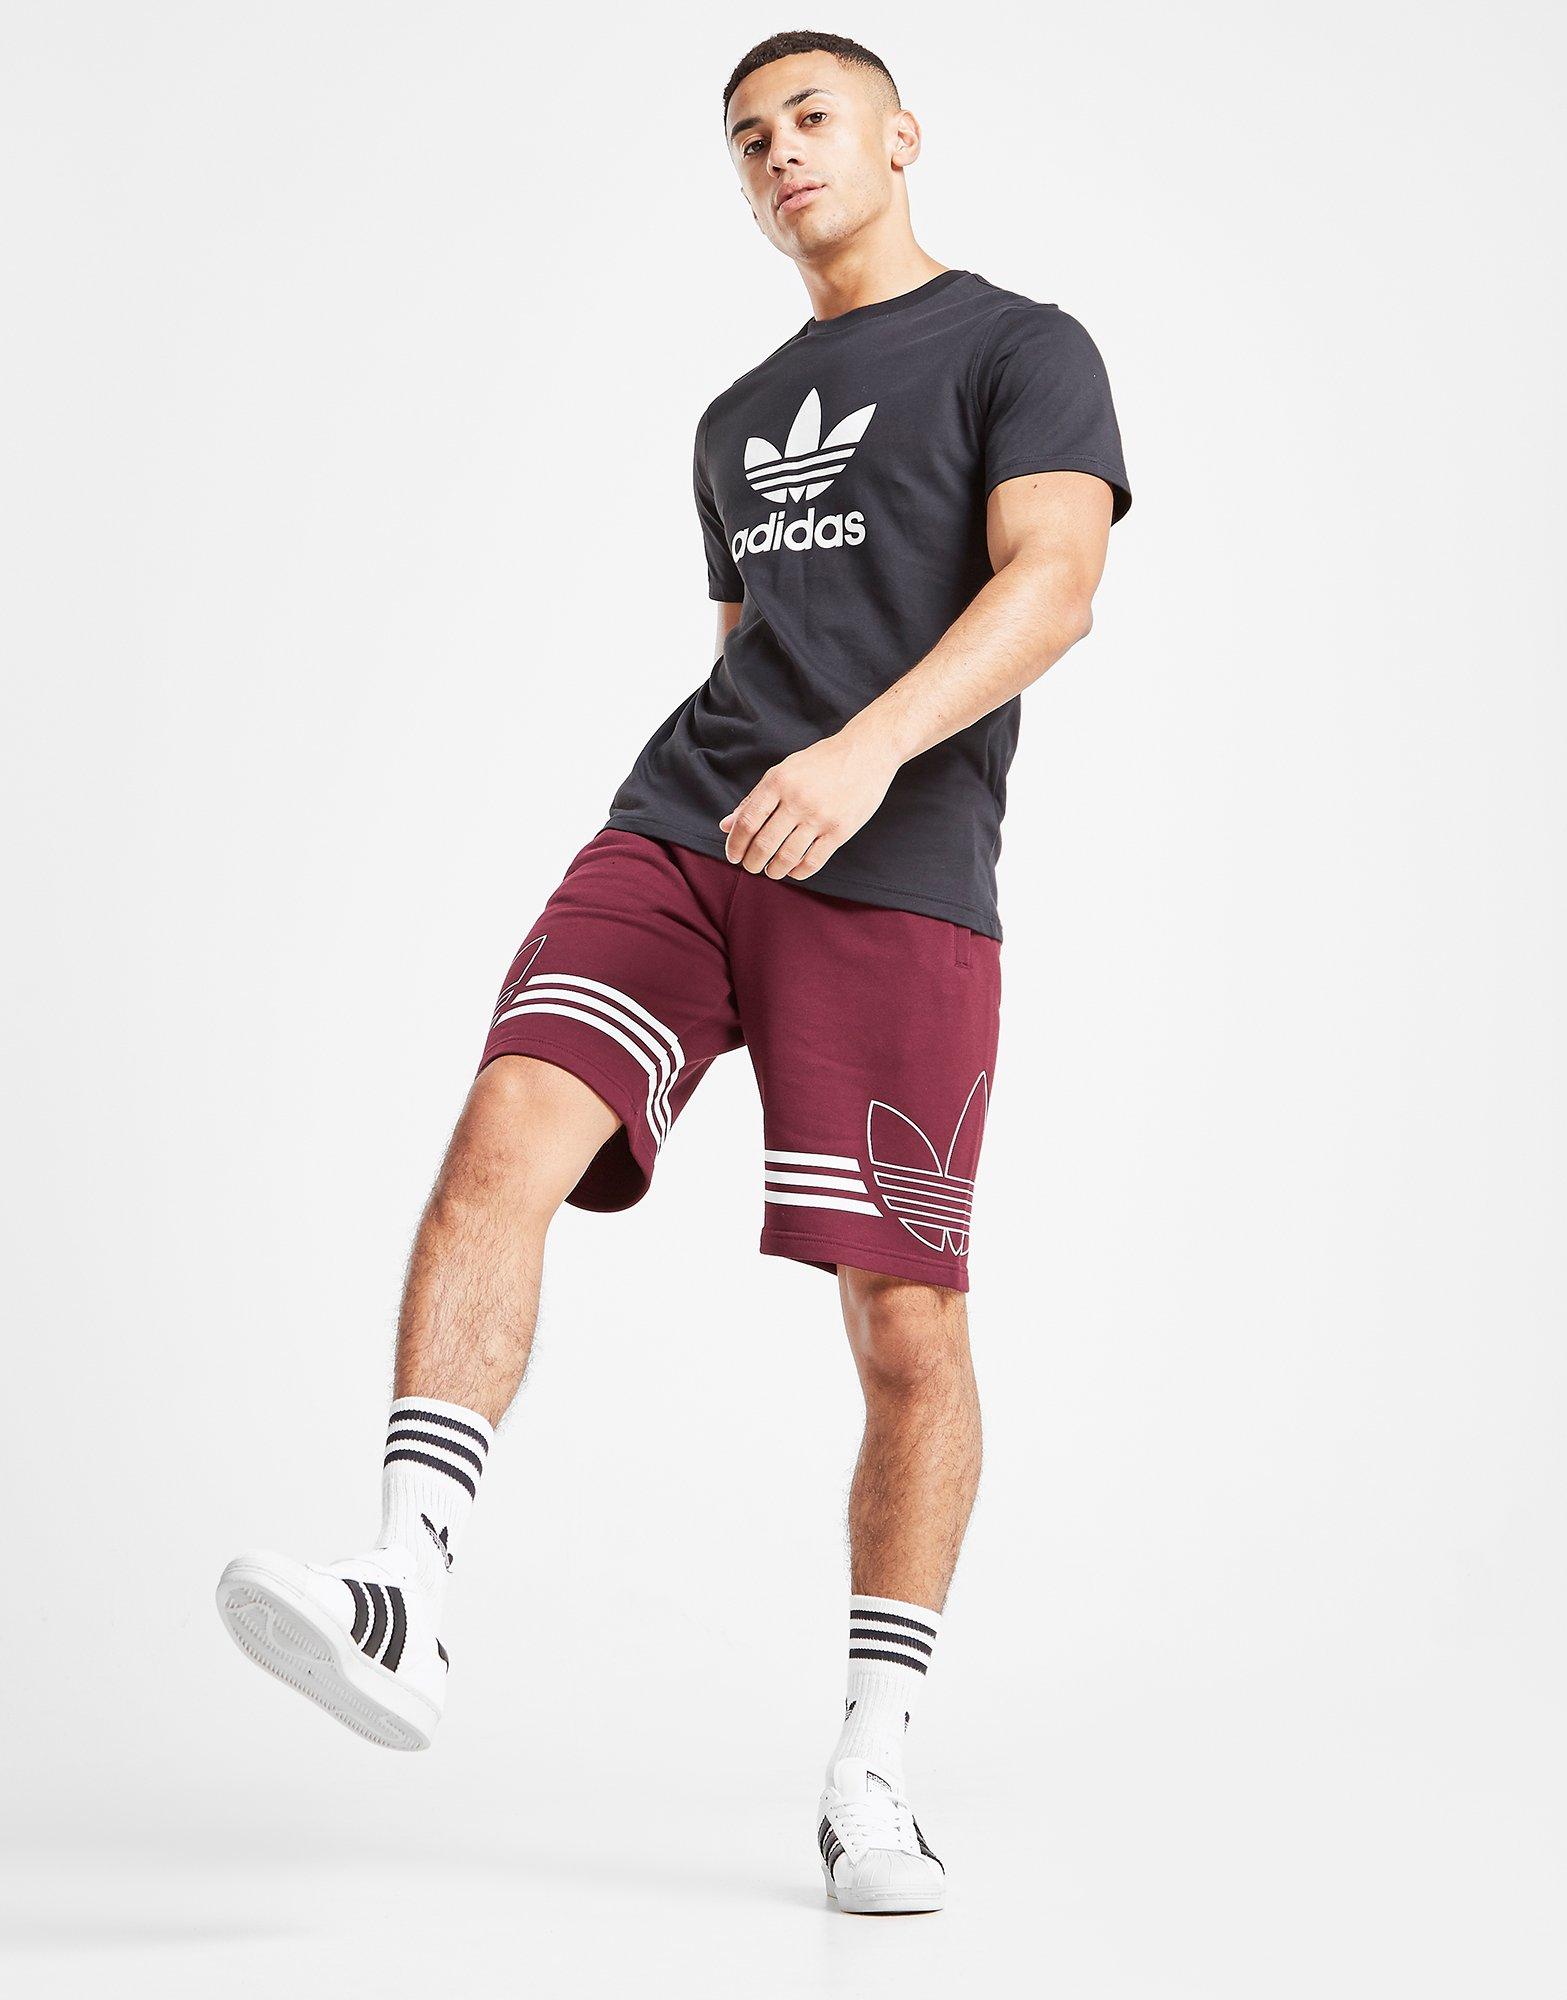 Adidas Originals radkin флисовые шорты 